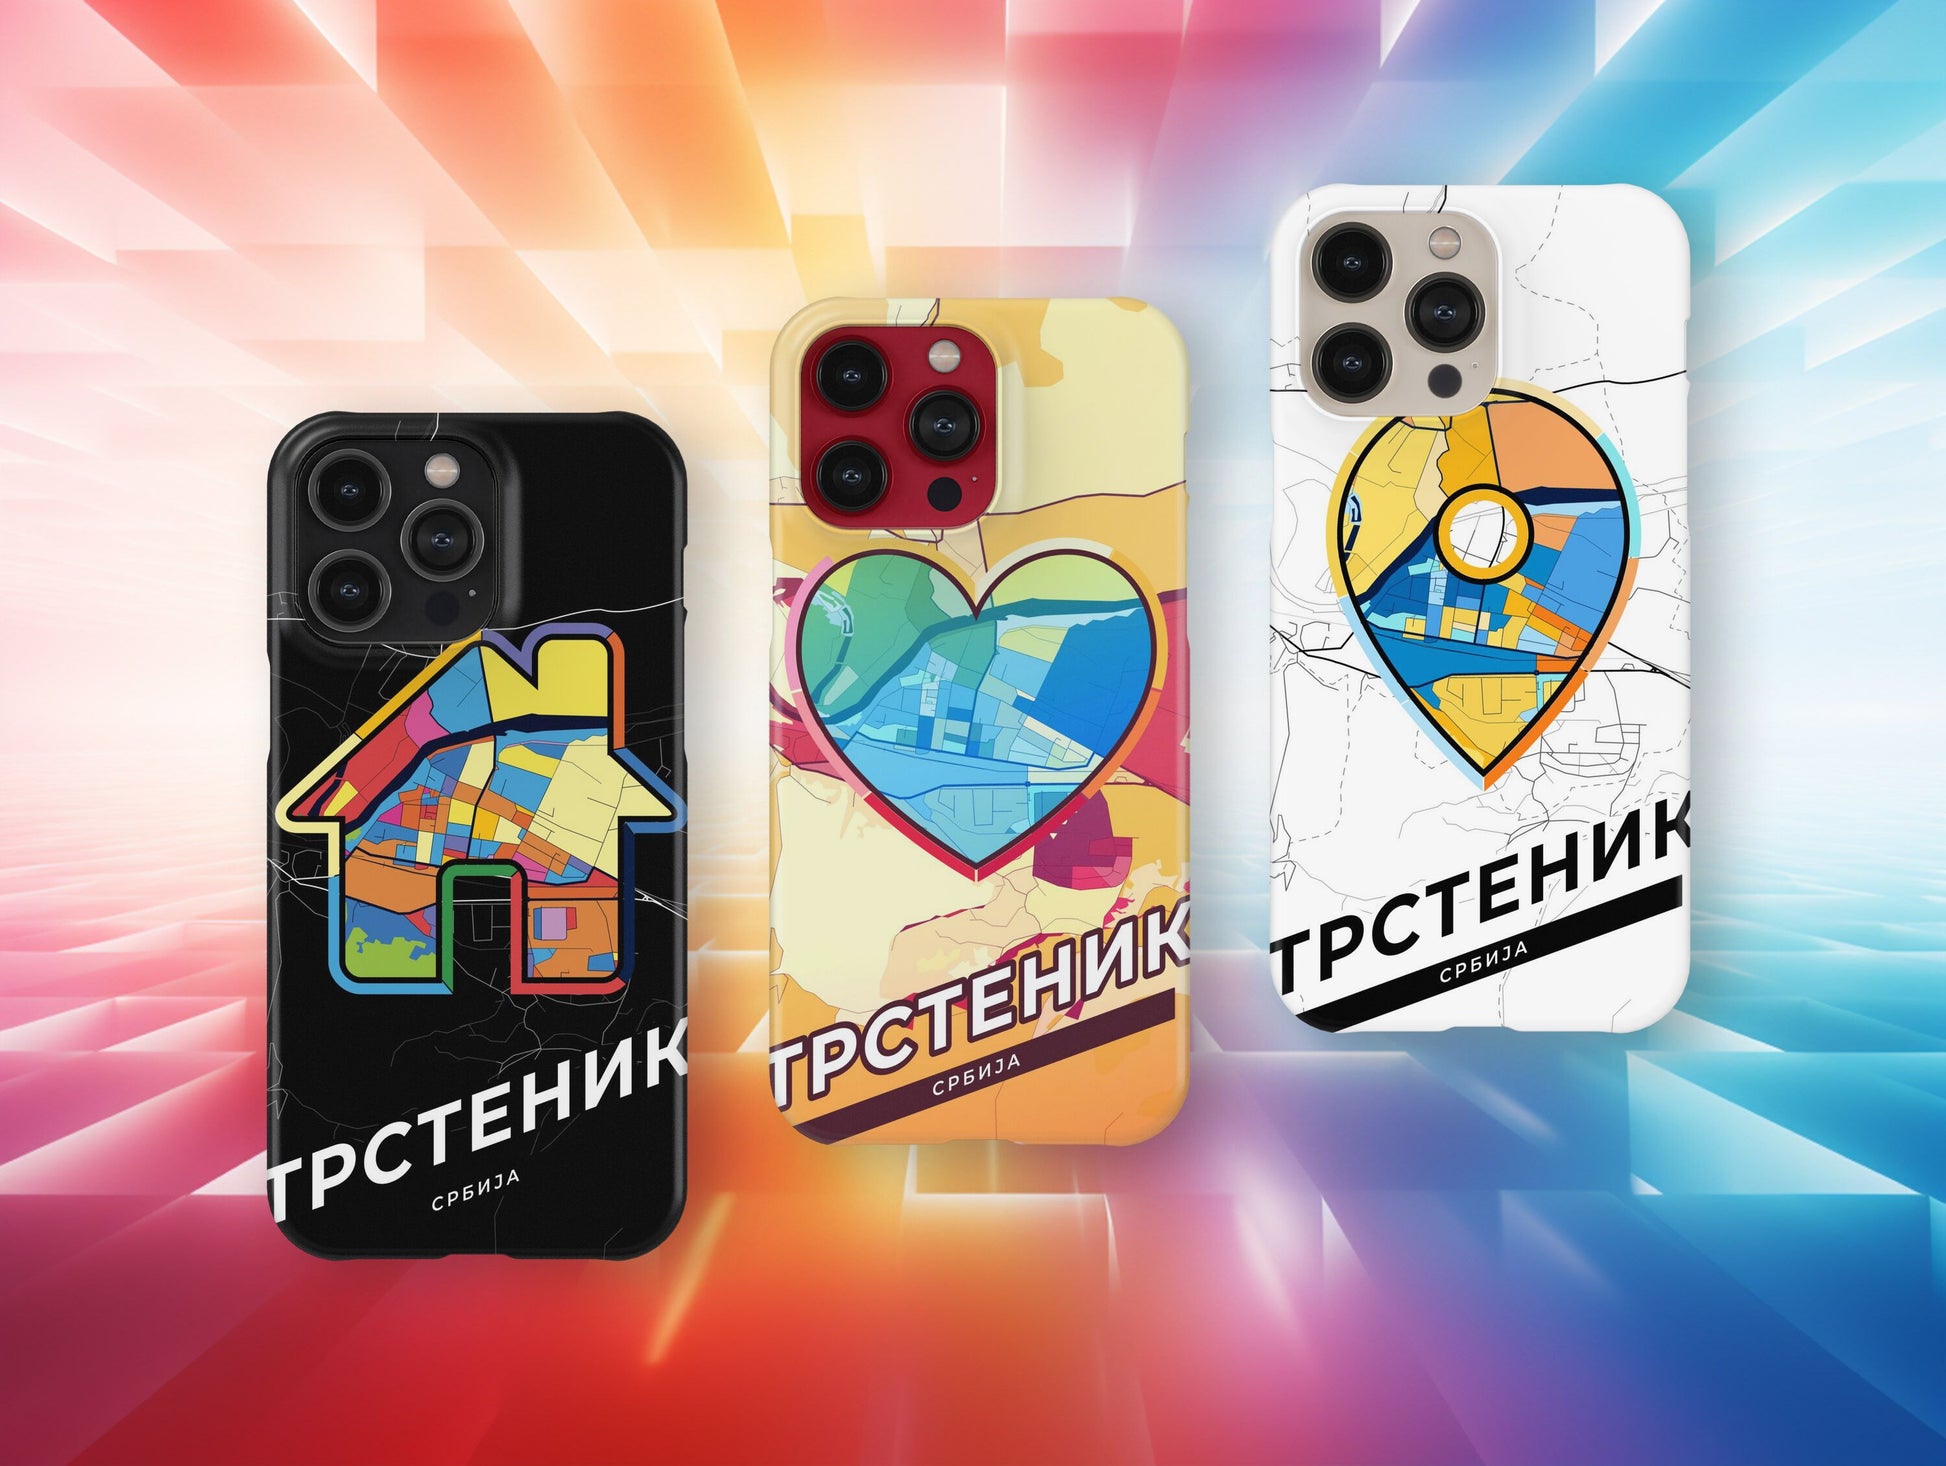 Trstenik Serbia slim phone case with colorful icon